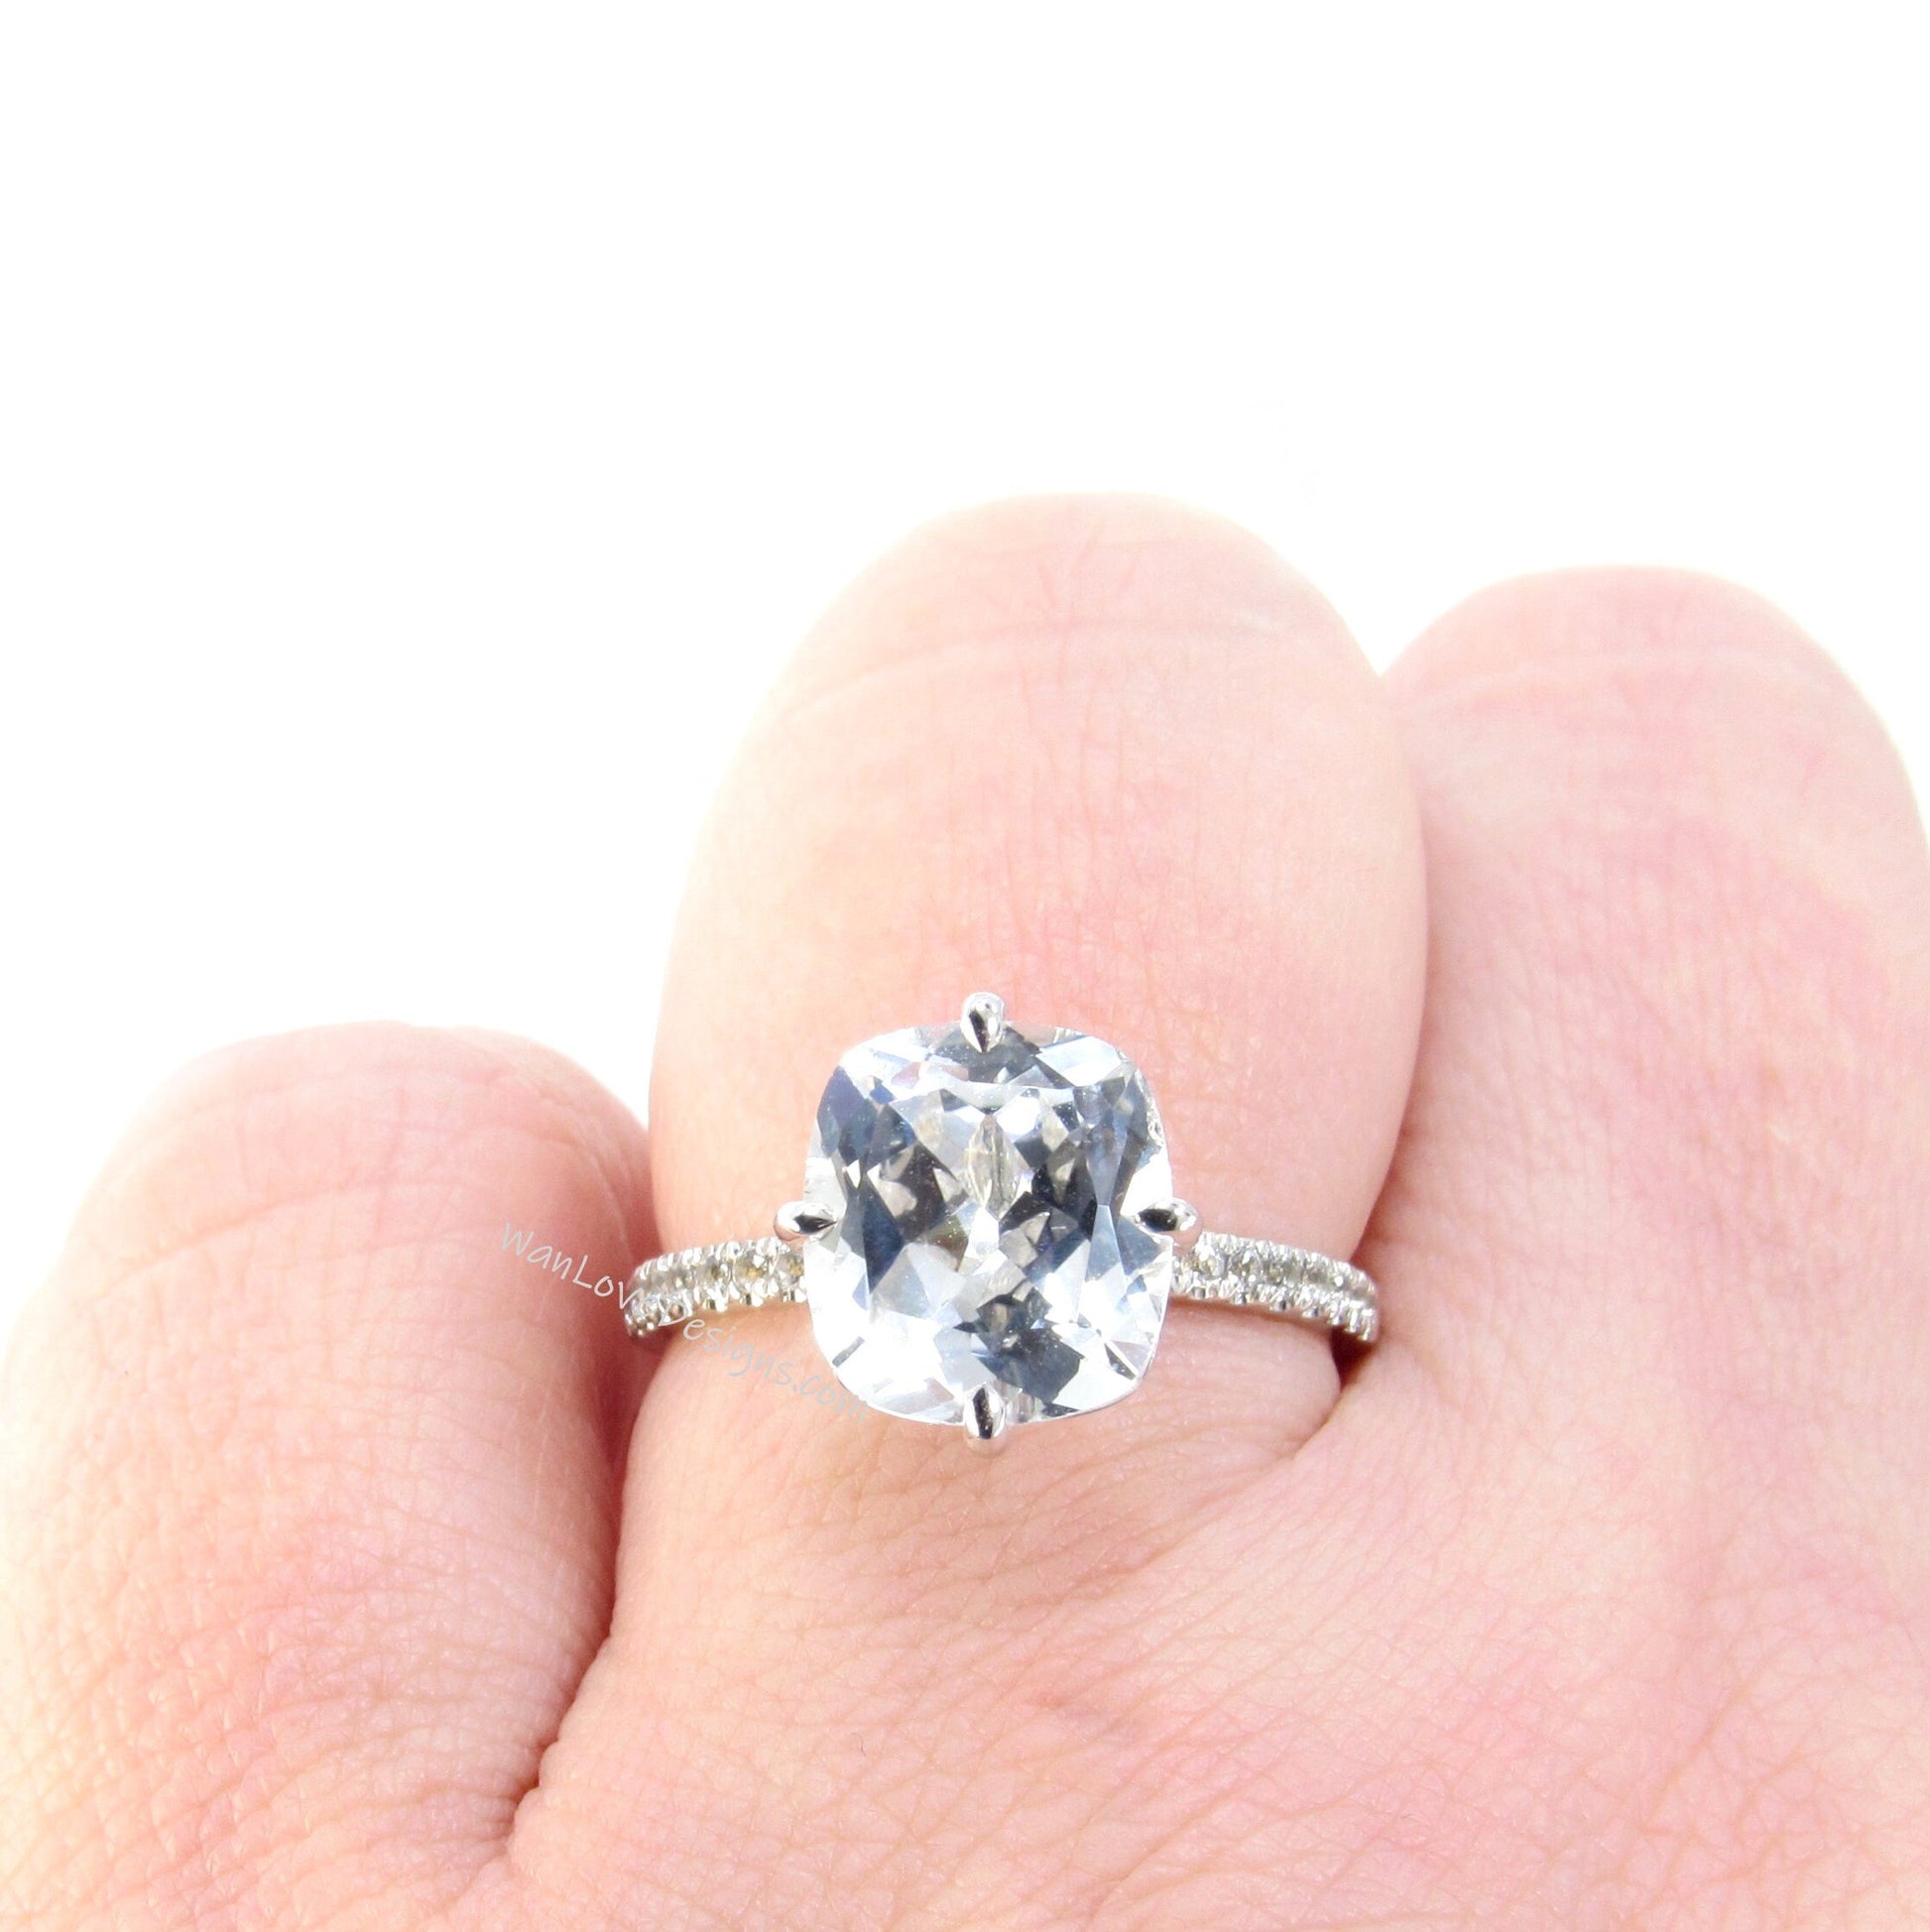 White Sapphire & Diamond Cushion Engagement Ring, Elongated, Celebrity, Custom, Statement, Wedding, Anniversary, Commitment, WanLoveDesigns